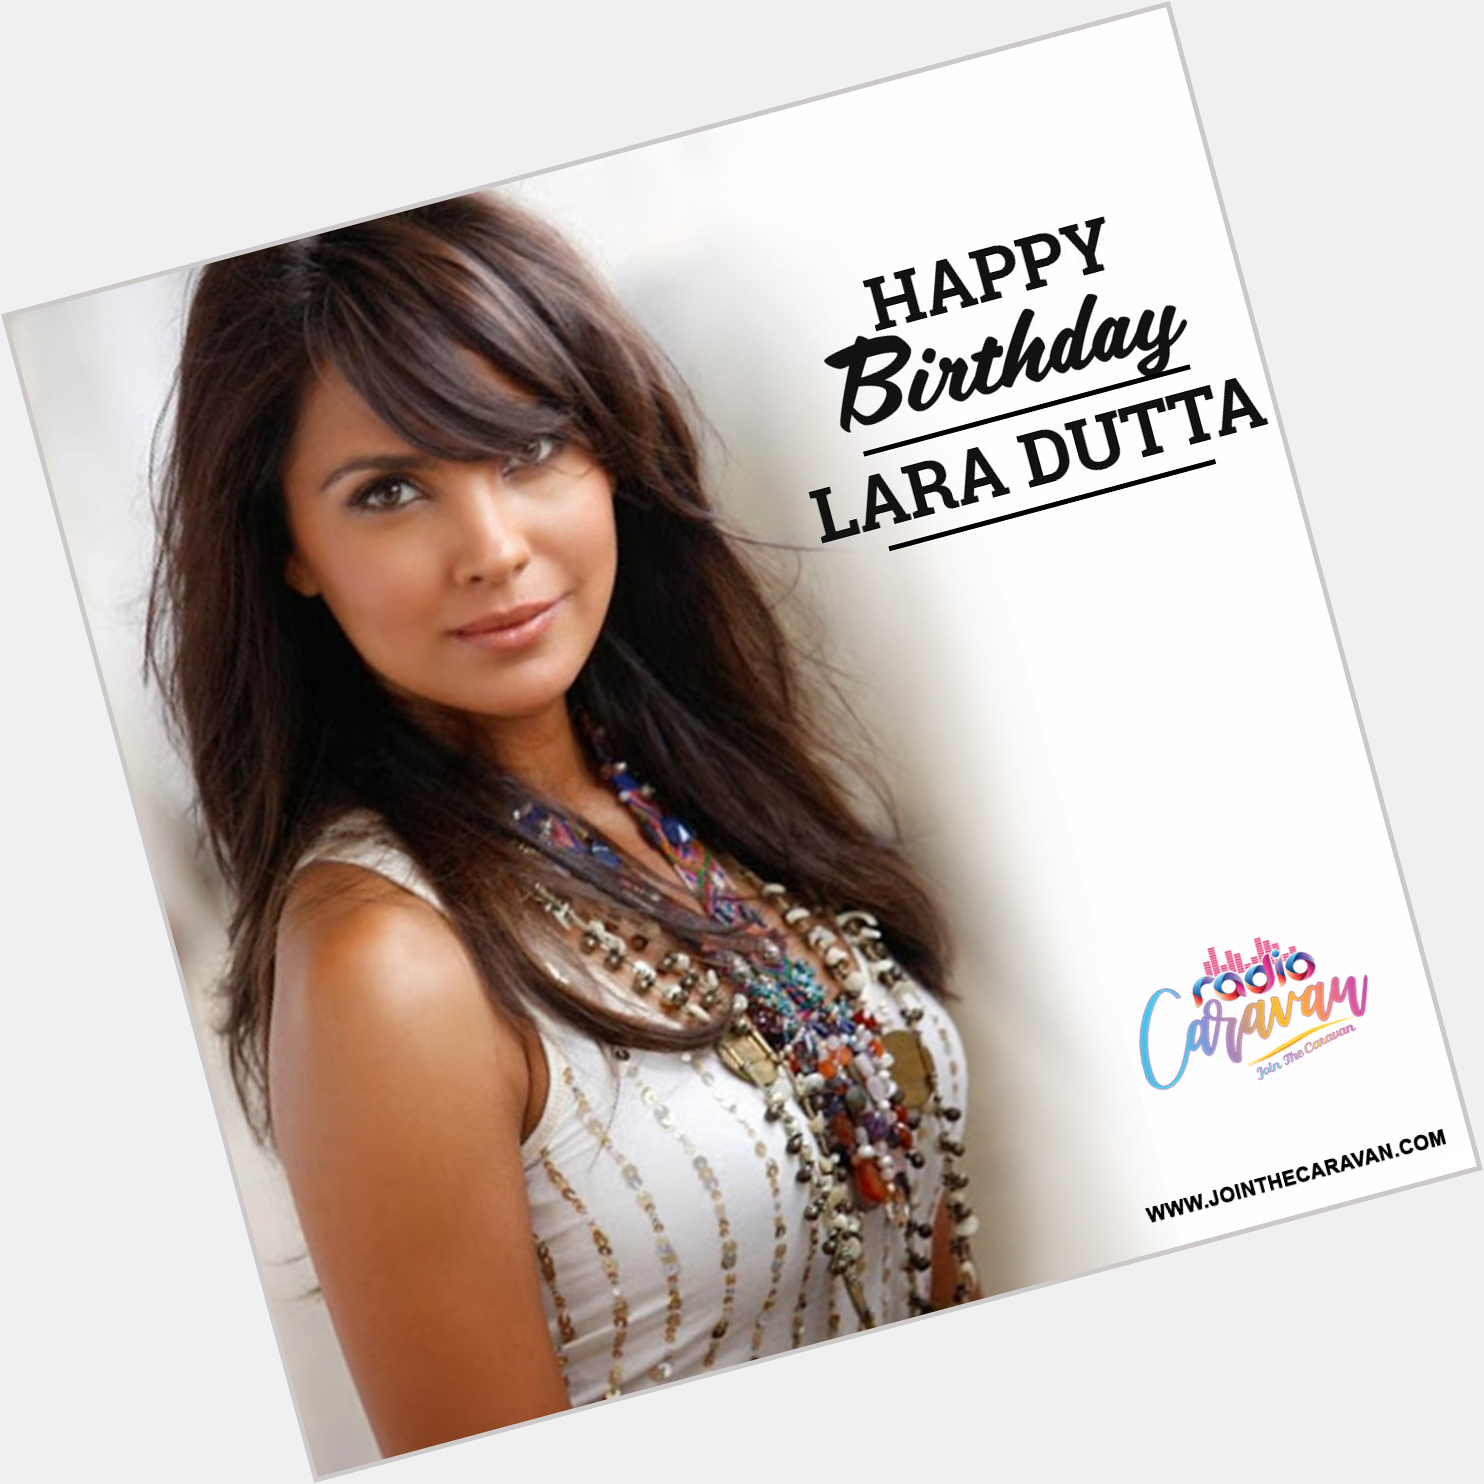 Radio caravan wishes you a very Happy Birthday Lara Dutta     